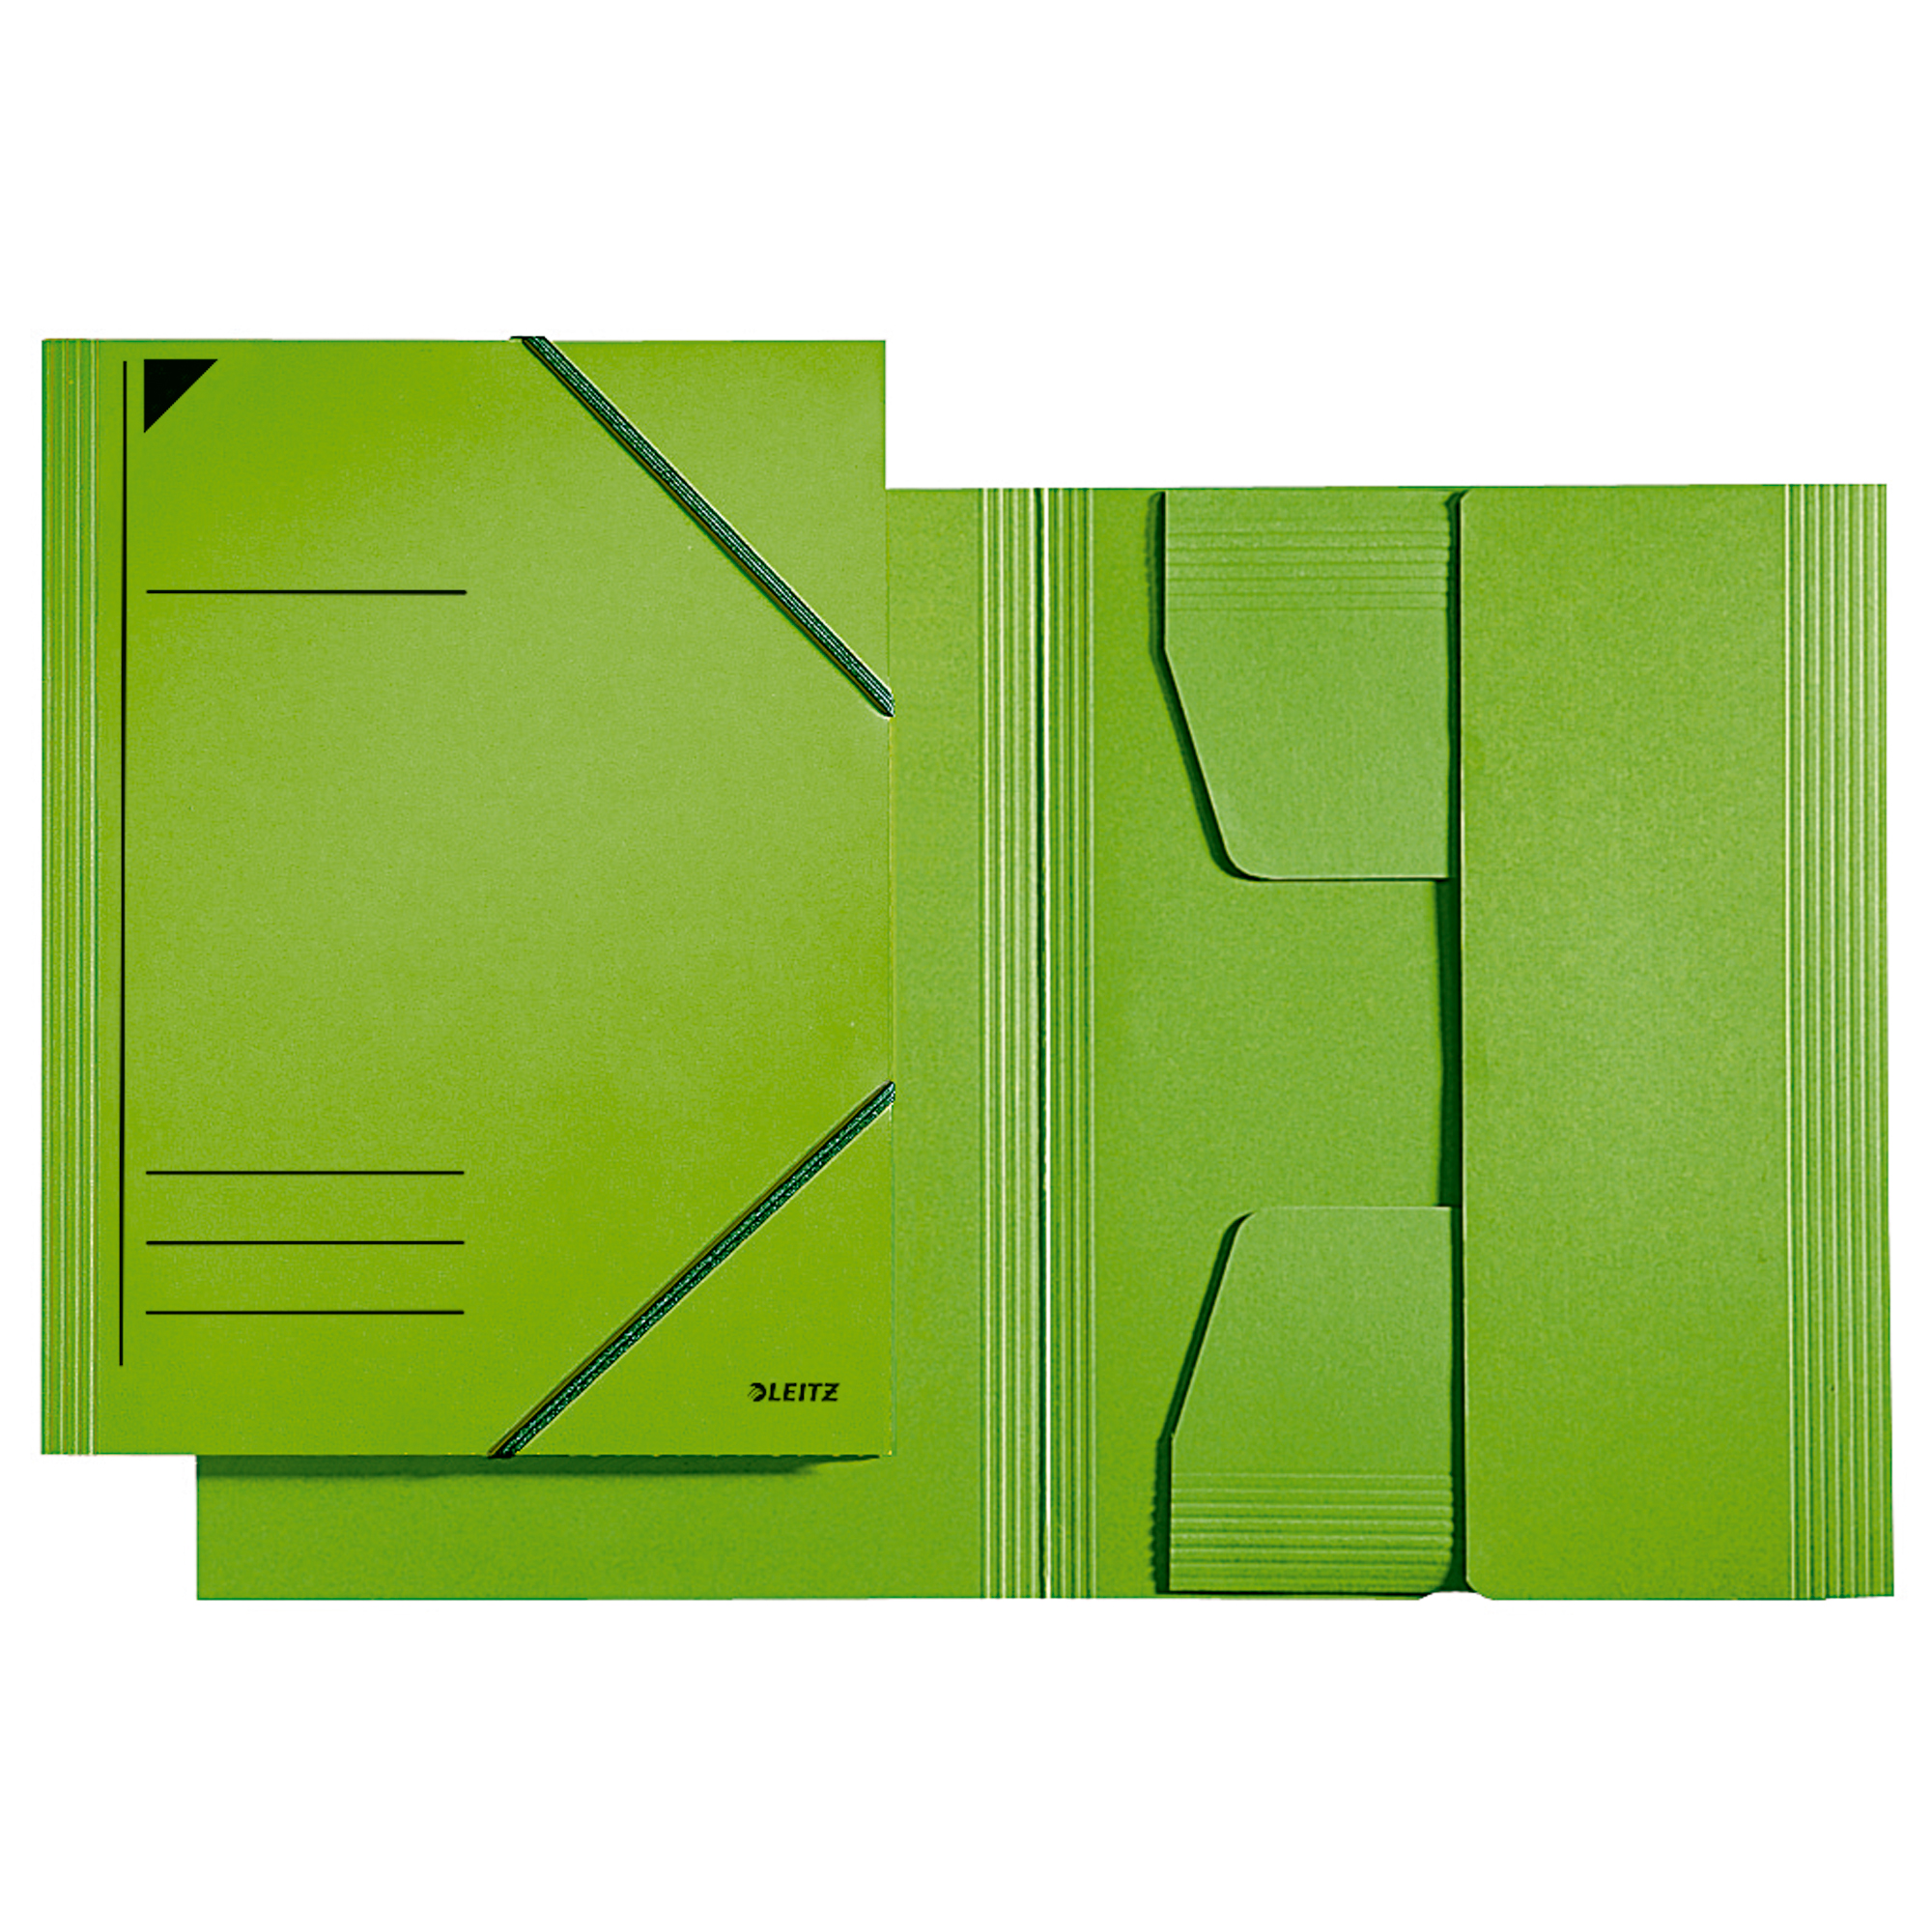 Leitz Eckspanner 24,2 x 31,8 cm grün